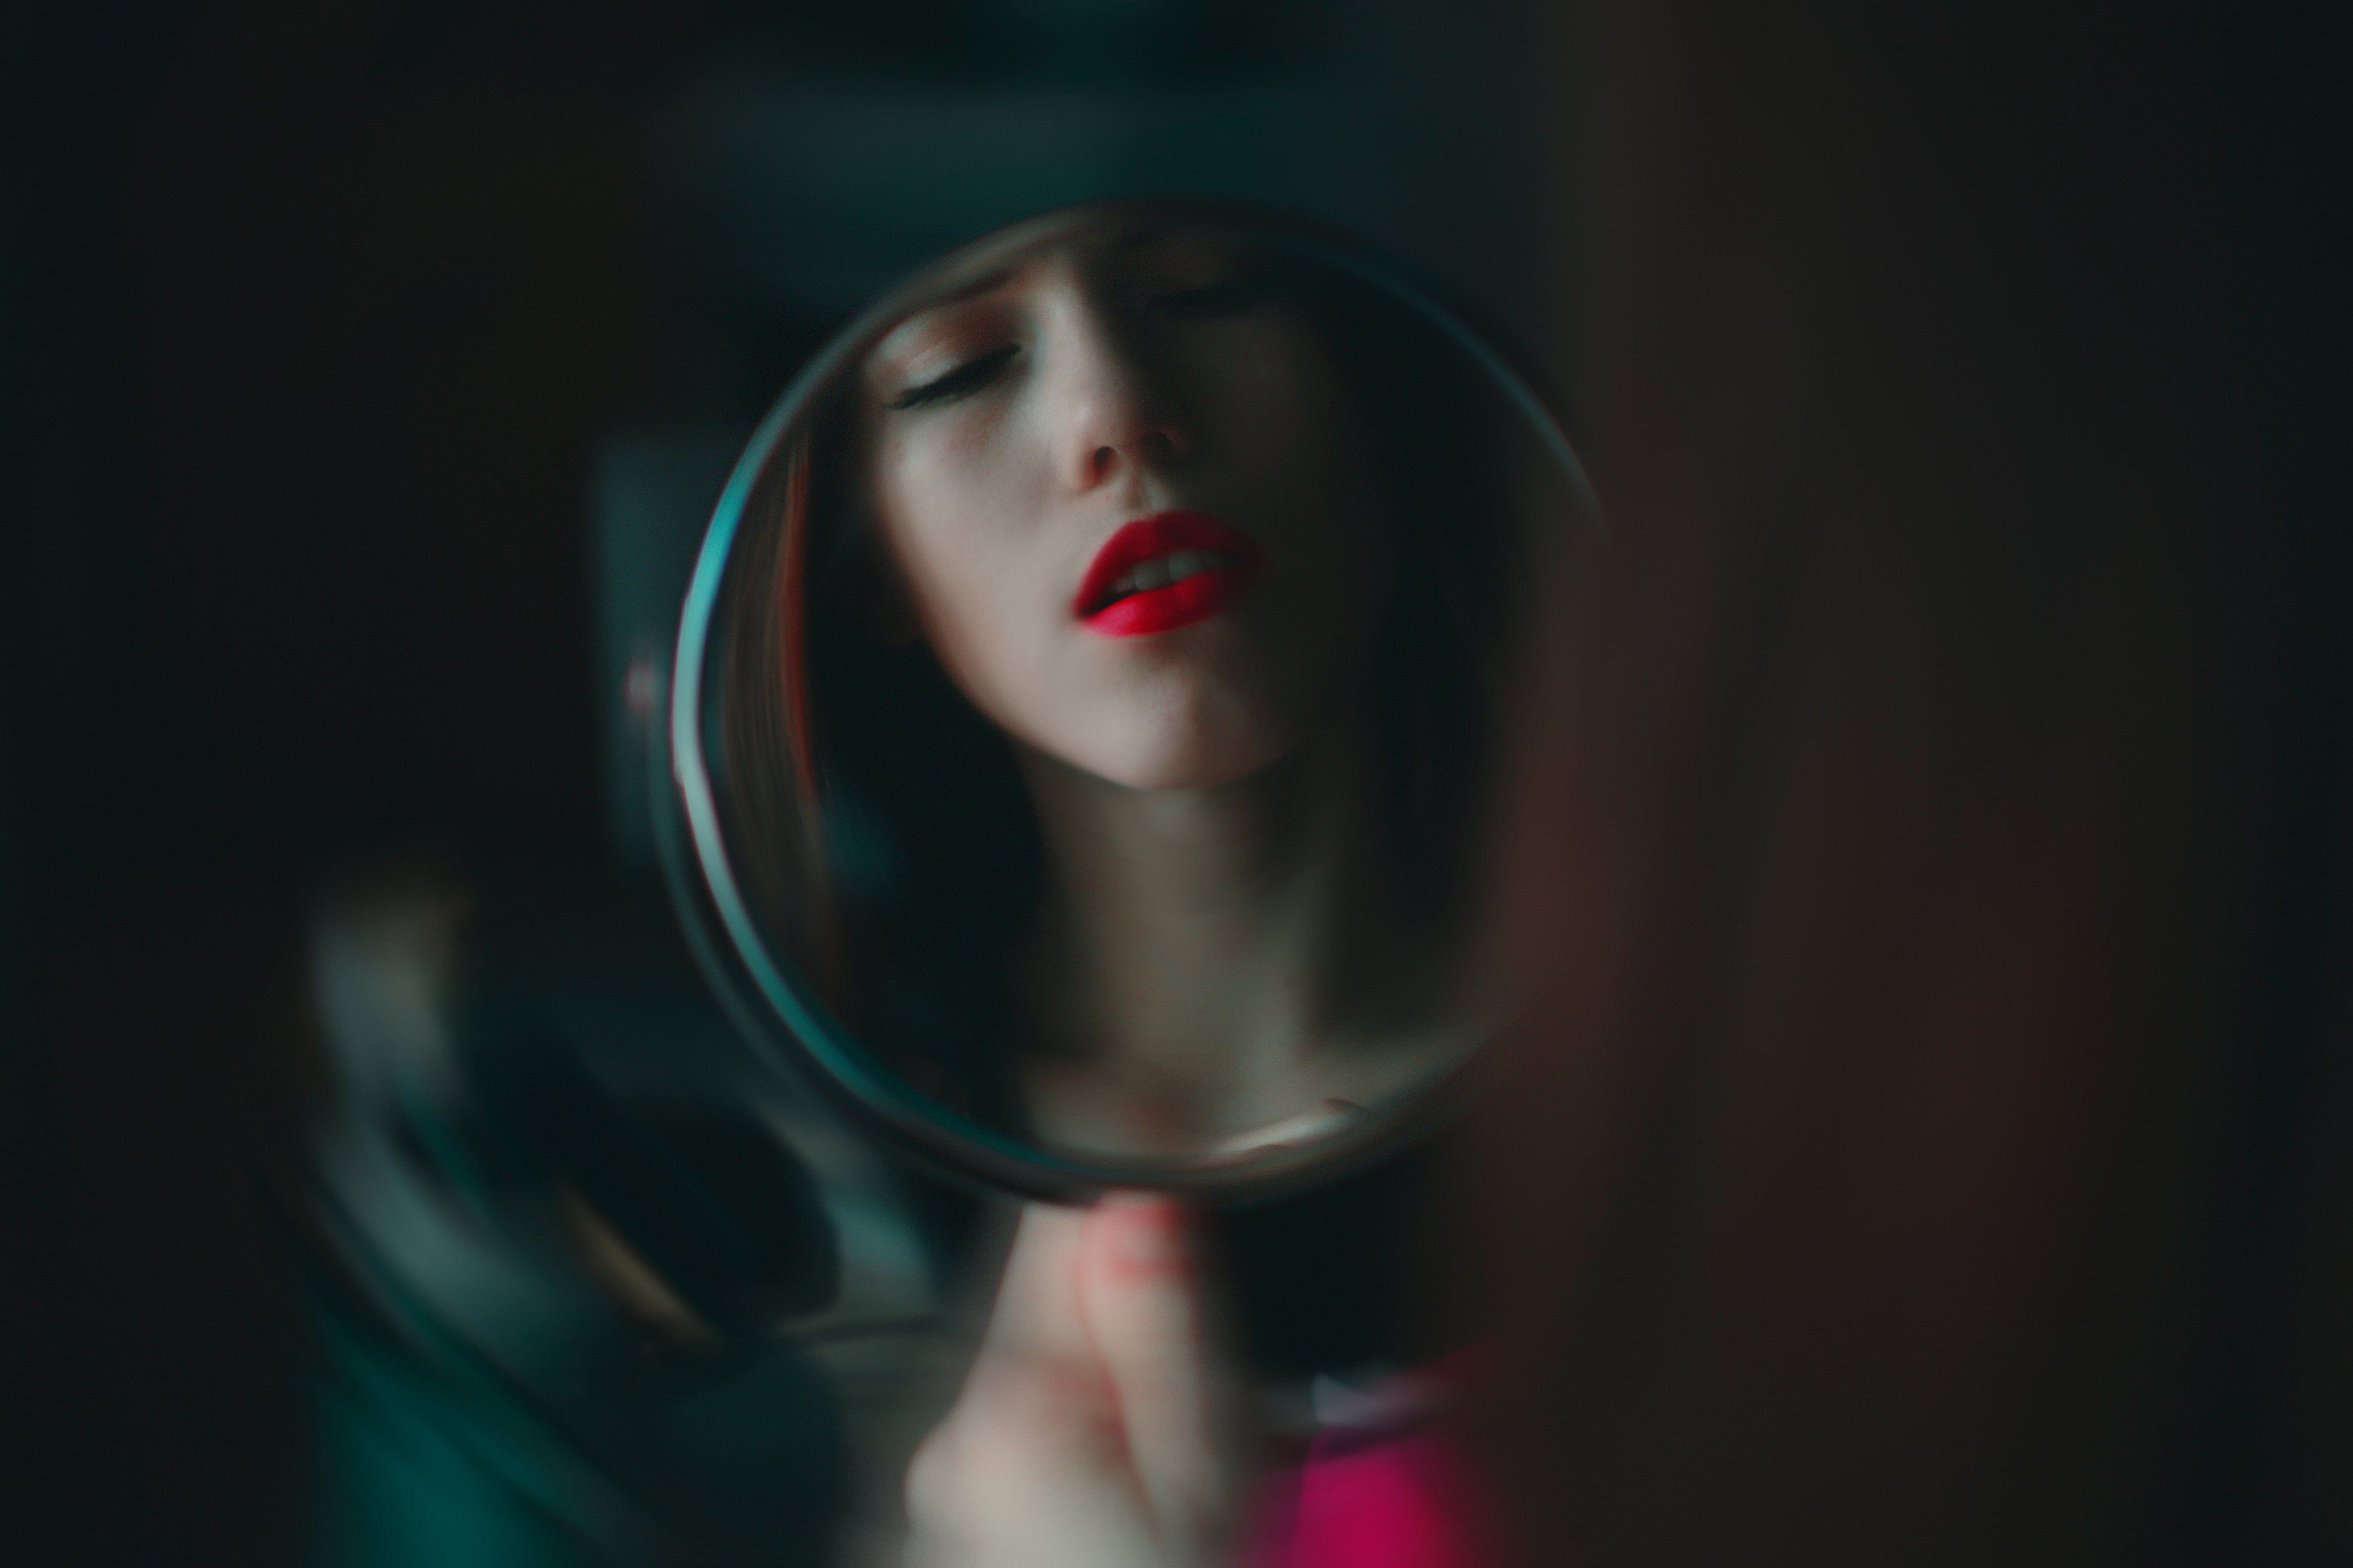 Selfie mirror reflection lips makeup mood girl wallpaperx2513